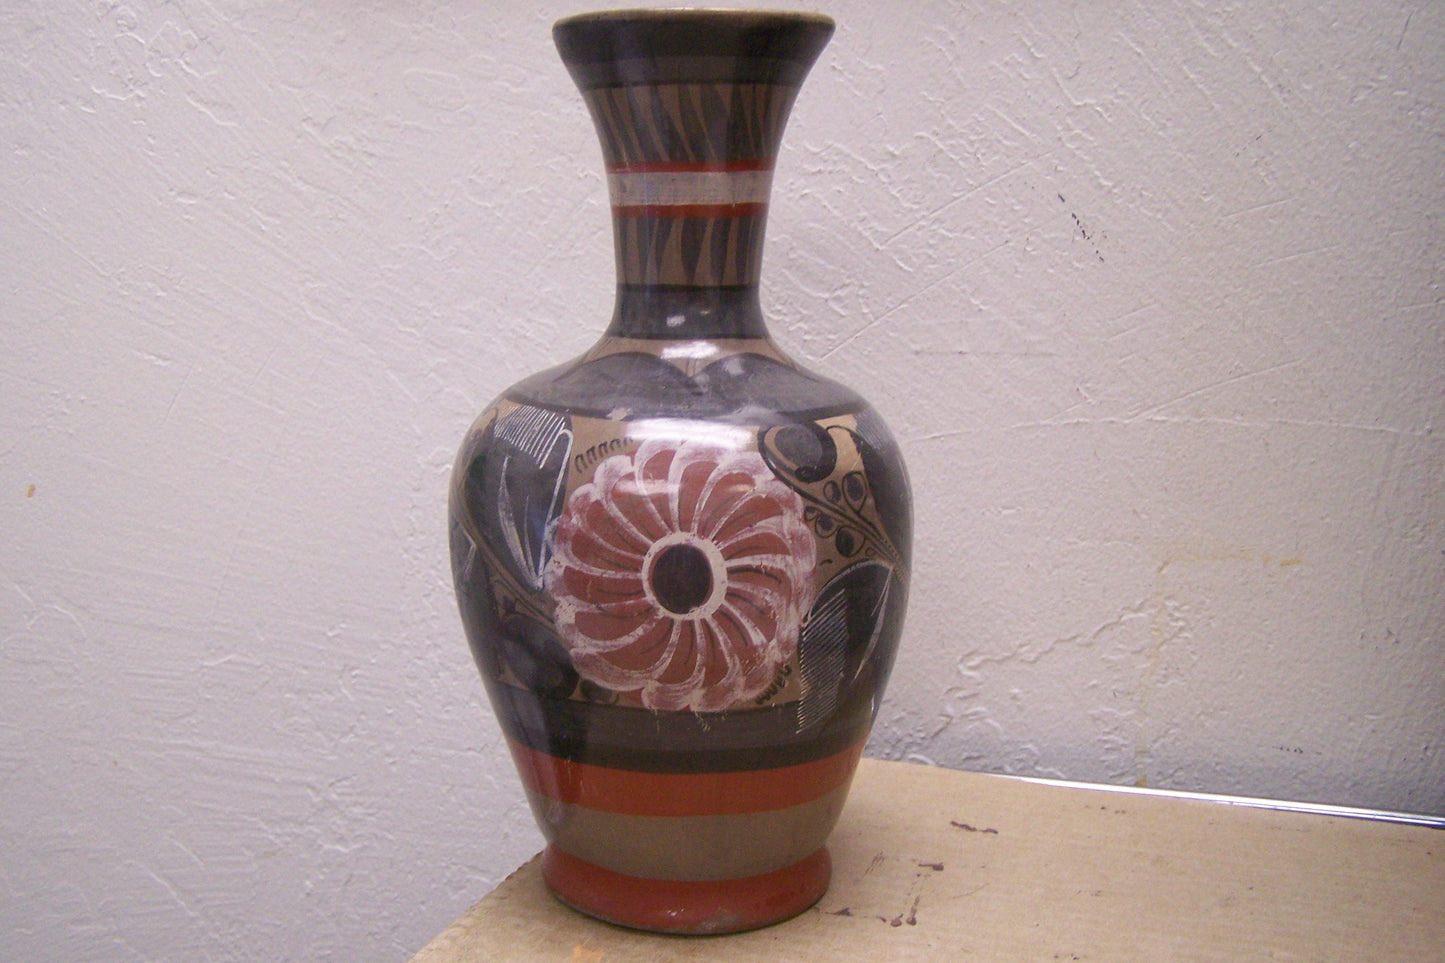 Vintage 1950s Burnished Vase with Floral and Leaf Pattern - Mexico